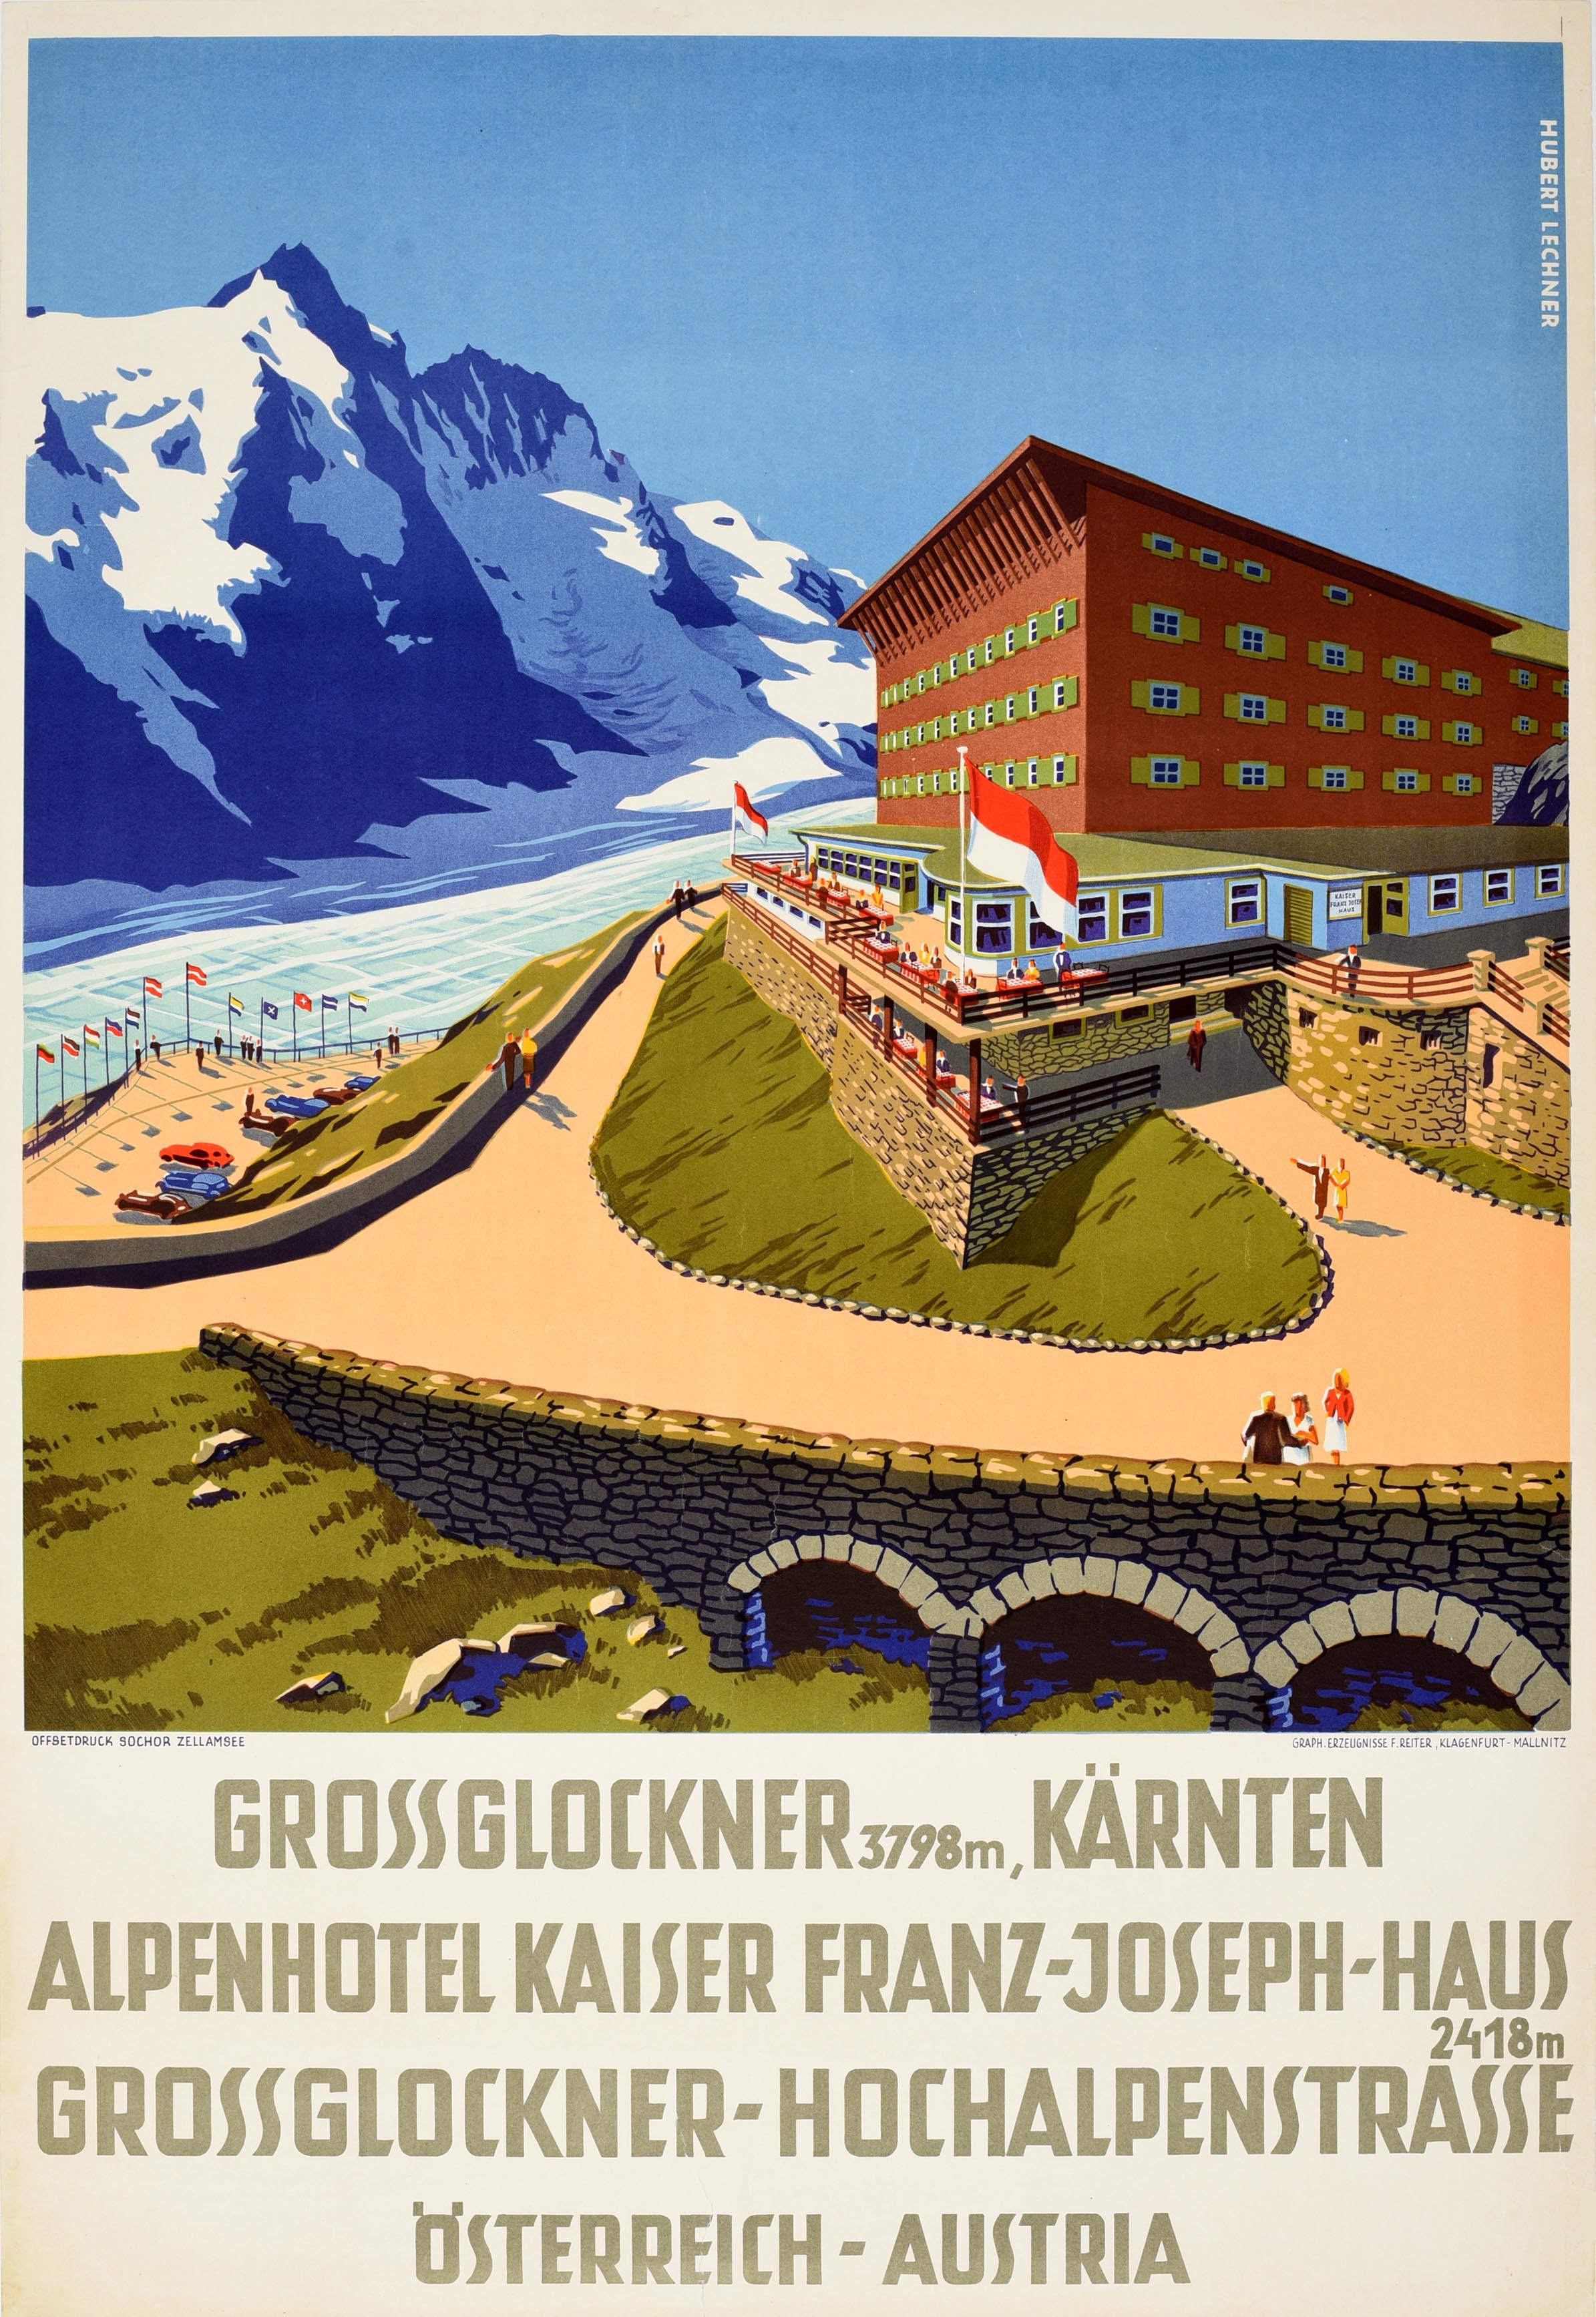 Hubert Lechner Print - Original Vintage Travel Poster Kaiser Franz Joseph Haus Hotel Austria Lechner